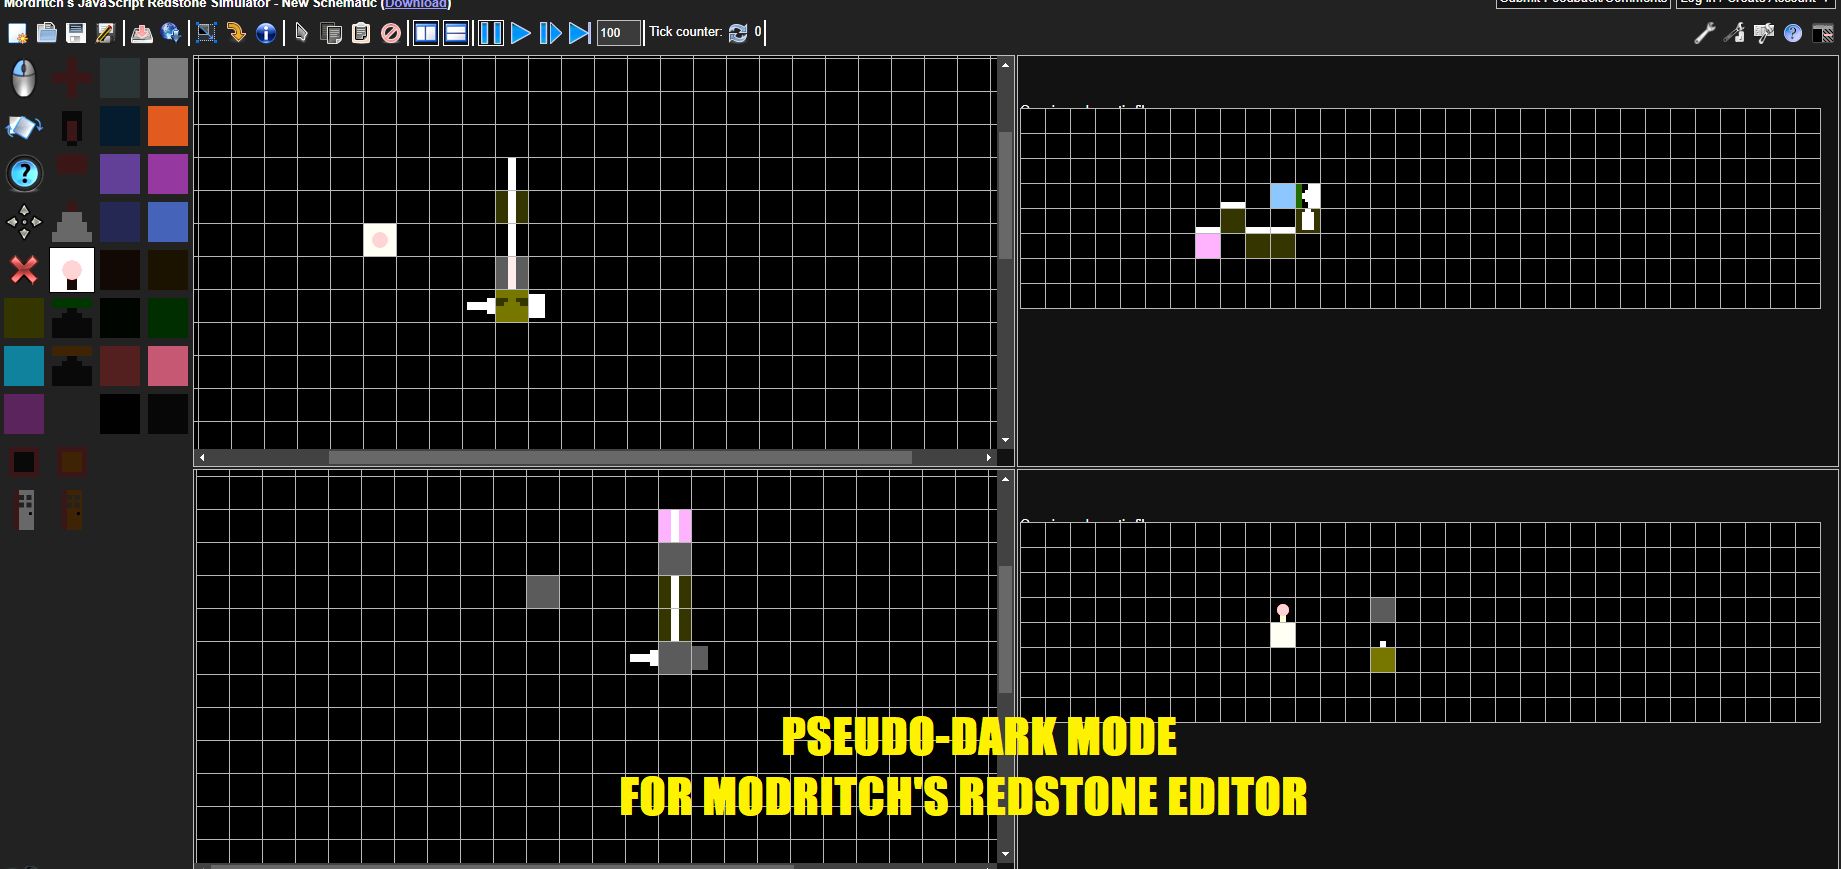 Screenshot of Mordritch's Redstone Editor - Dark Mode (Pseudo-Dark using Pixel Filters)